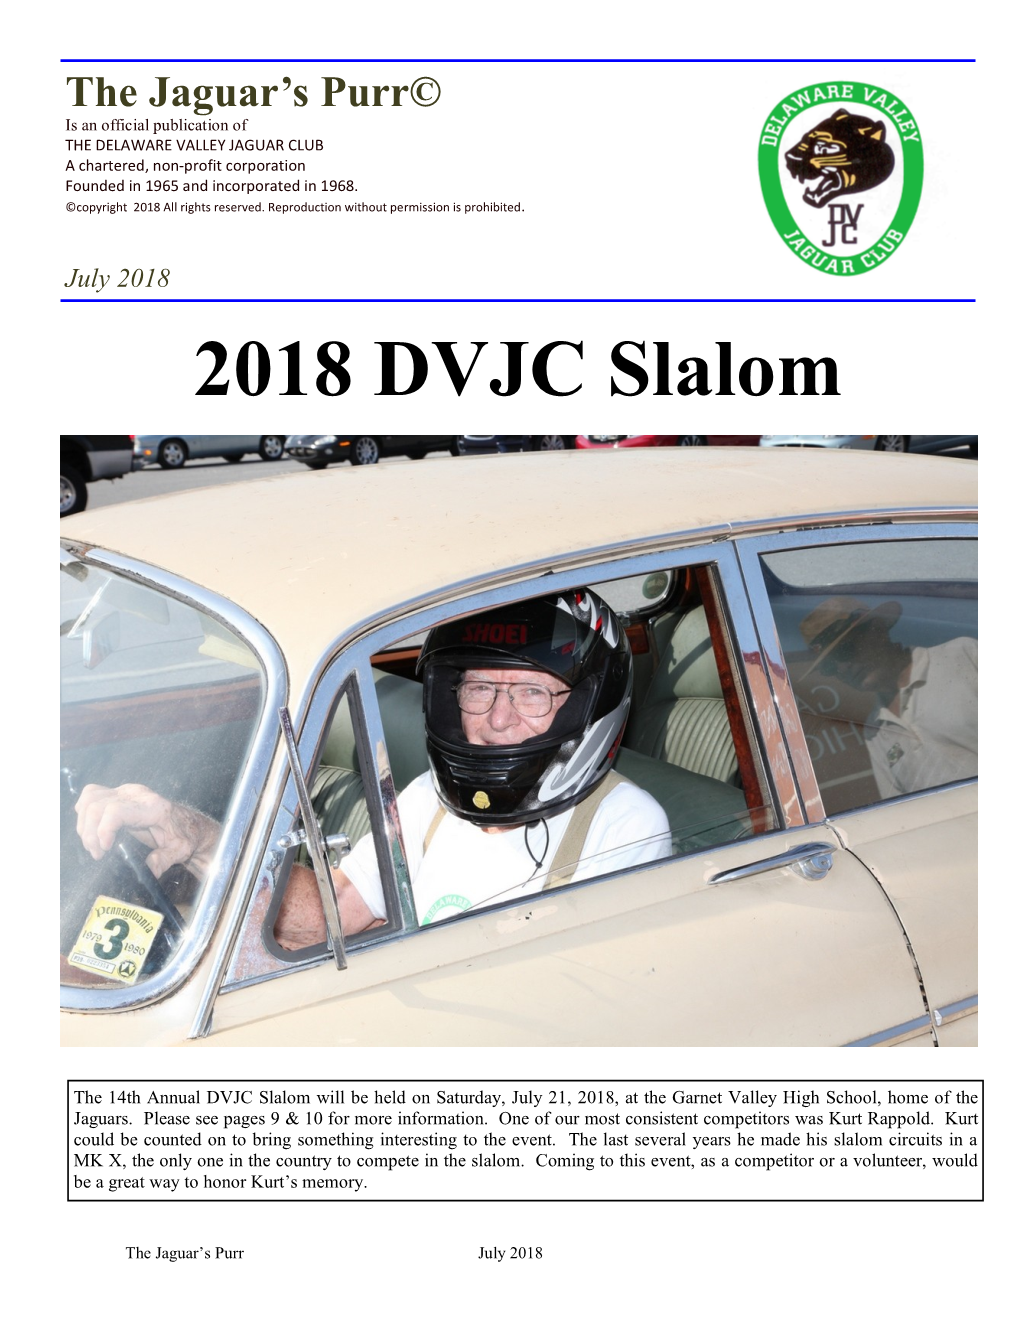 2018 DVJC Slalom